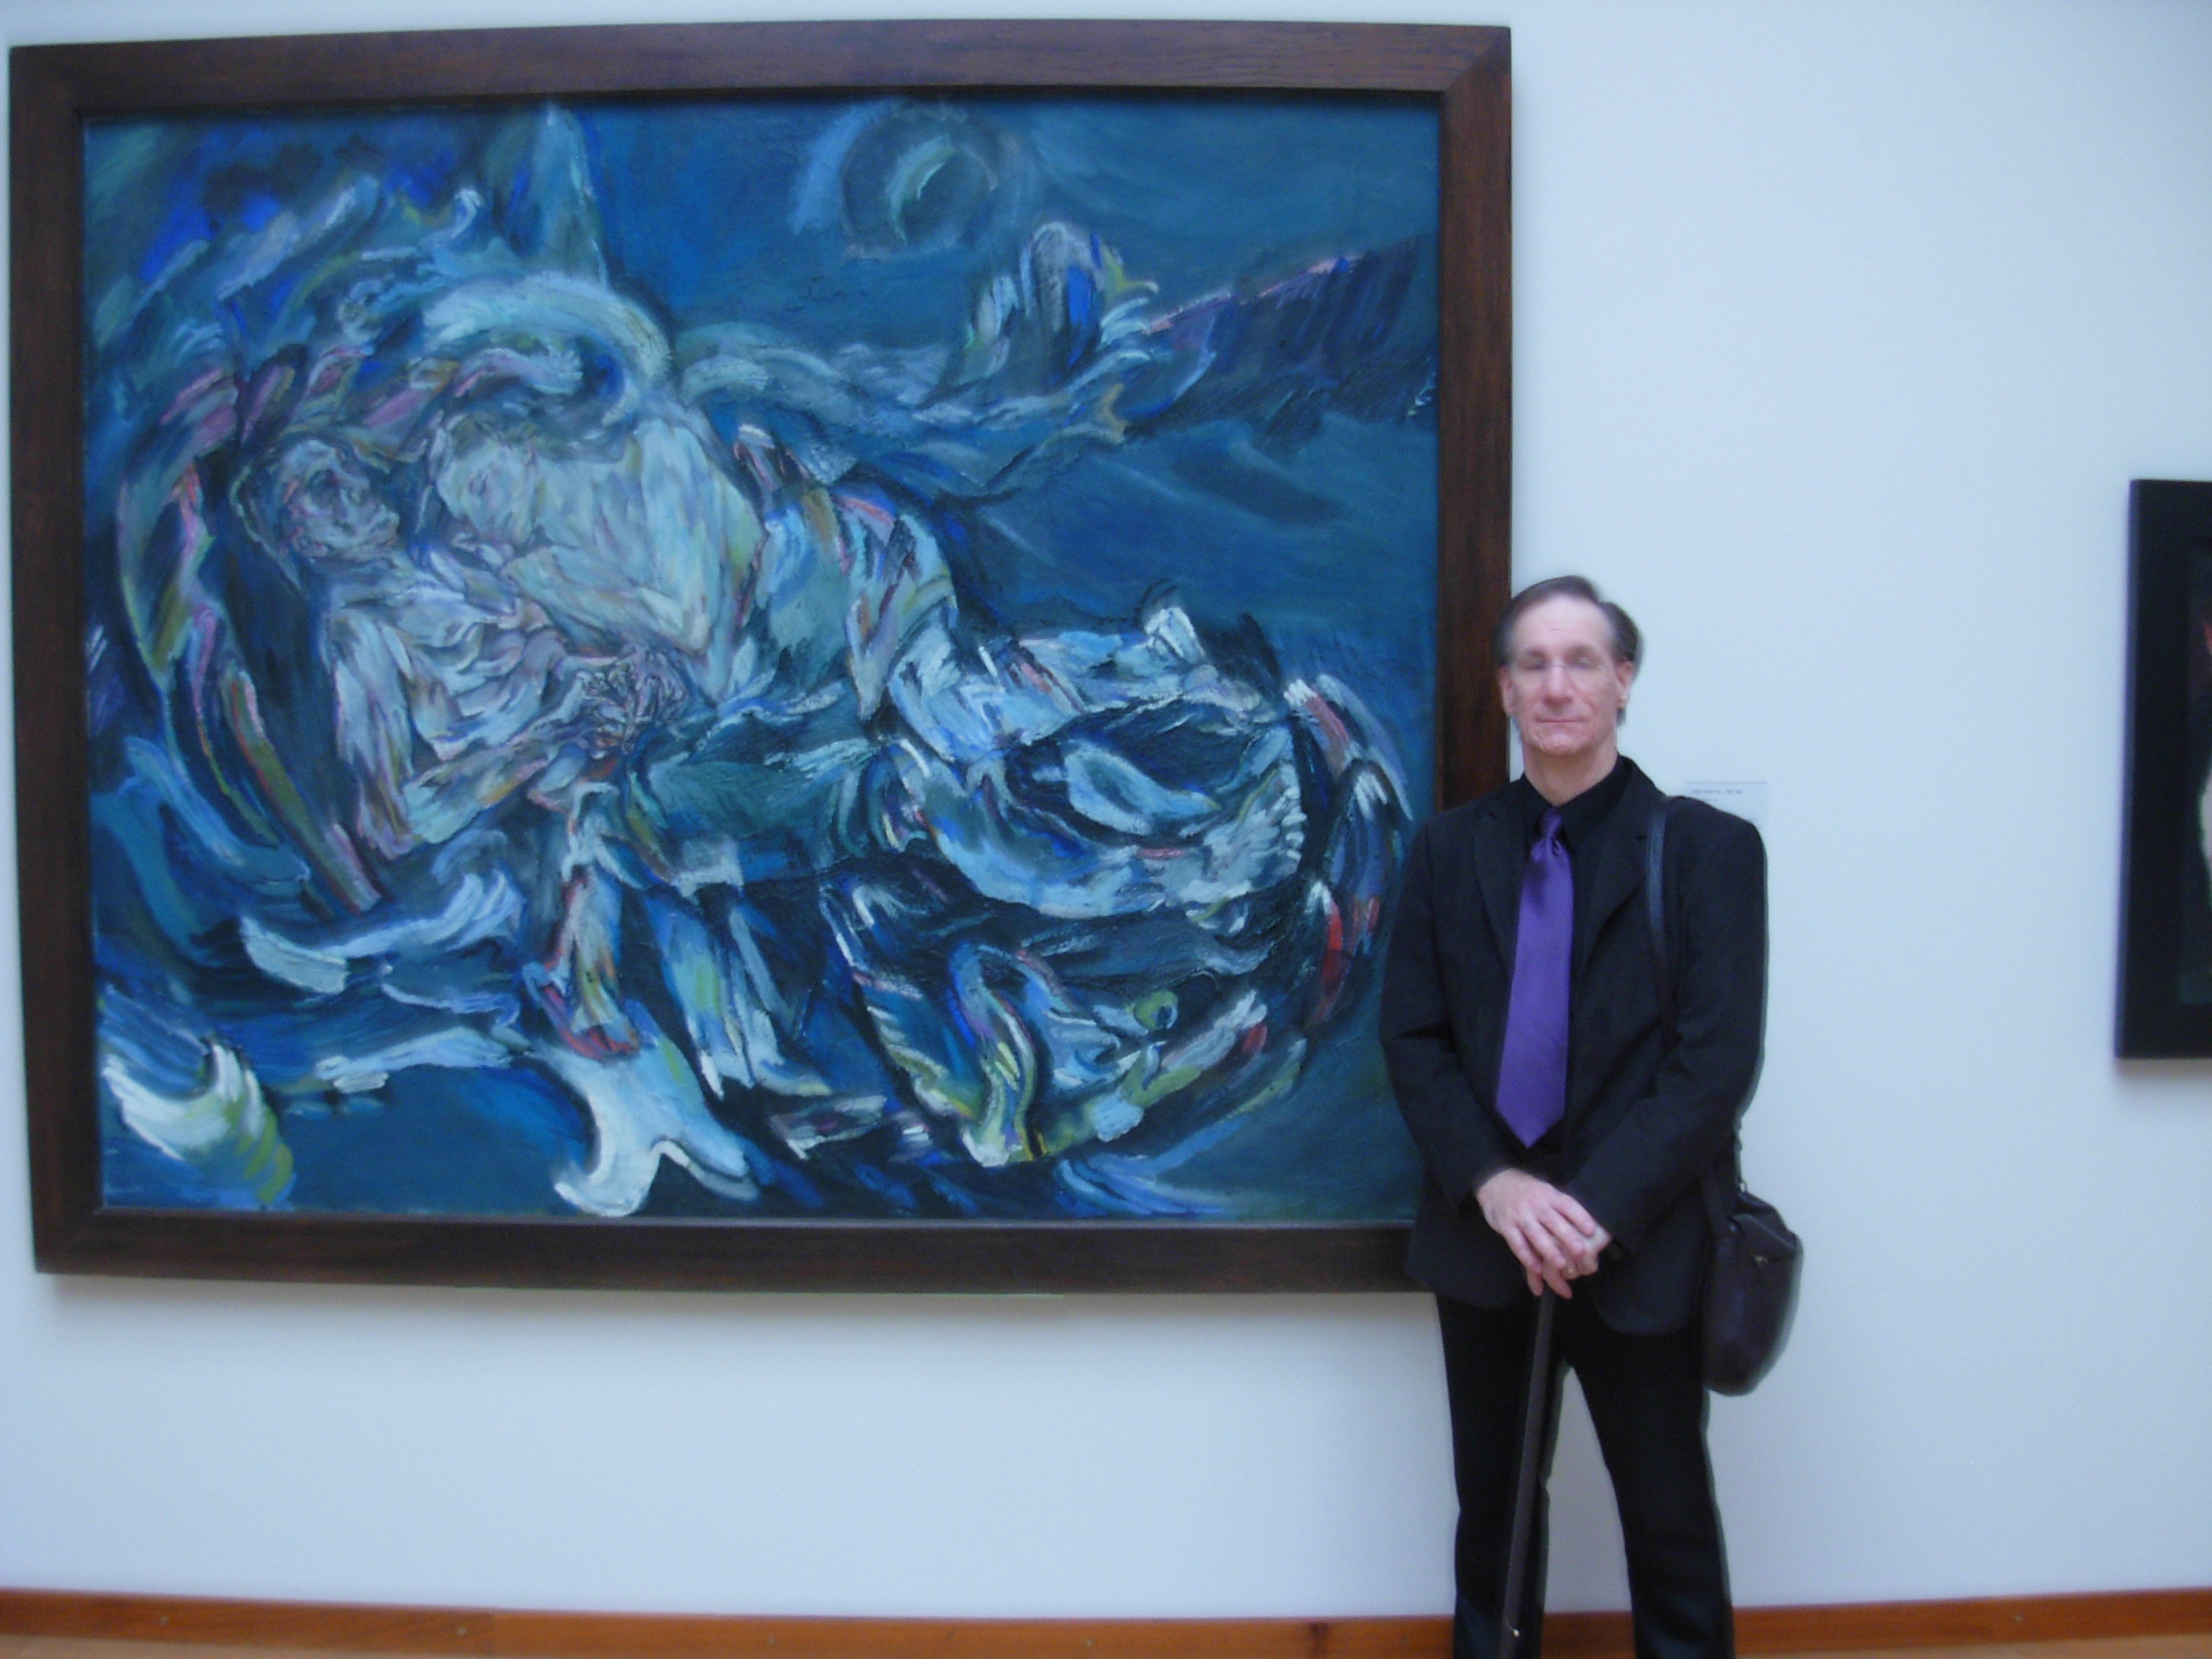 Ken Ludden poses at Kuntsmuseum Basel by Oscar Kokoshka painting 